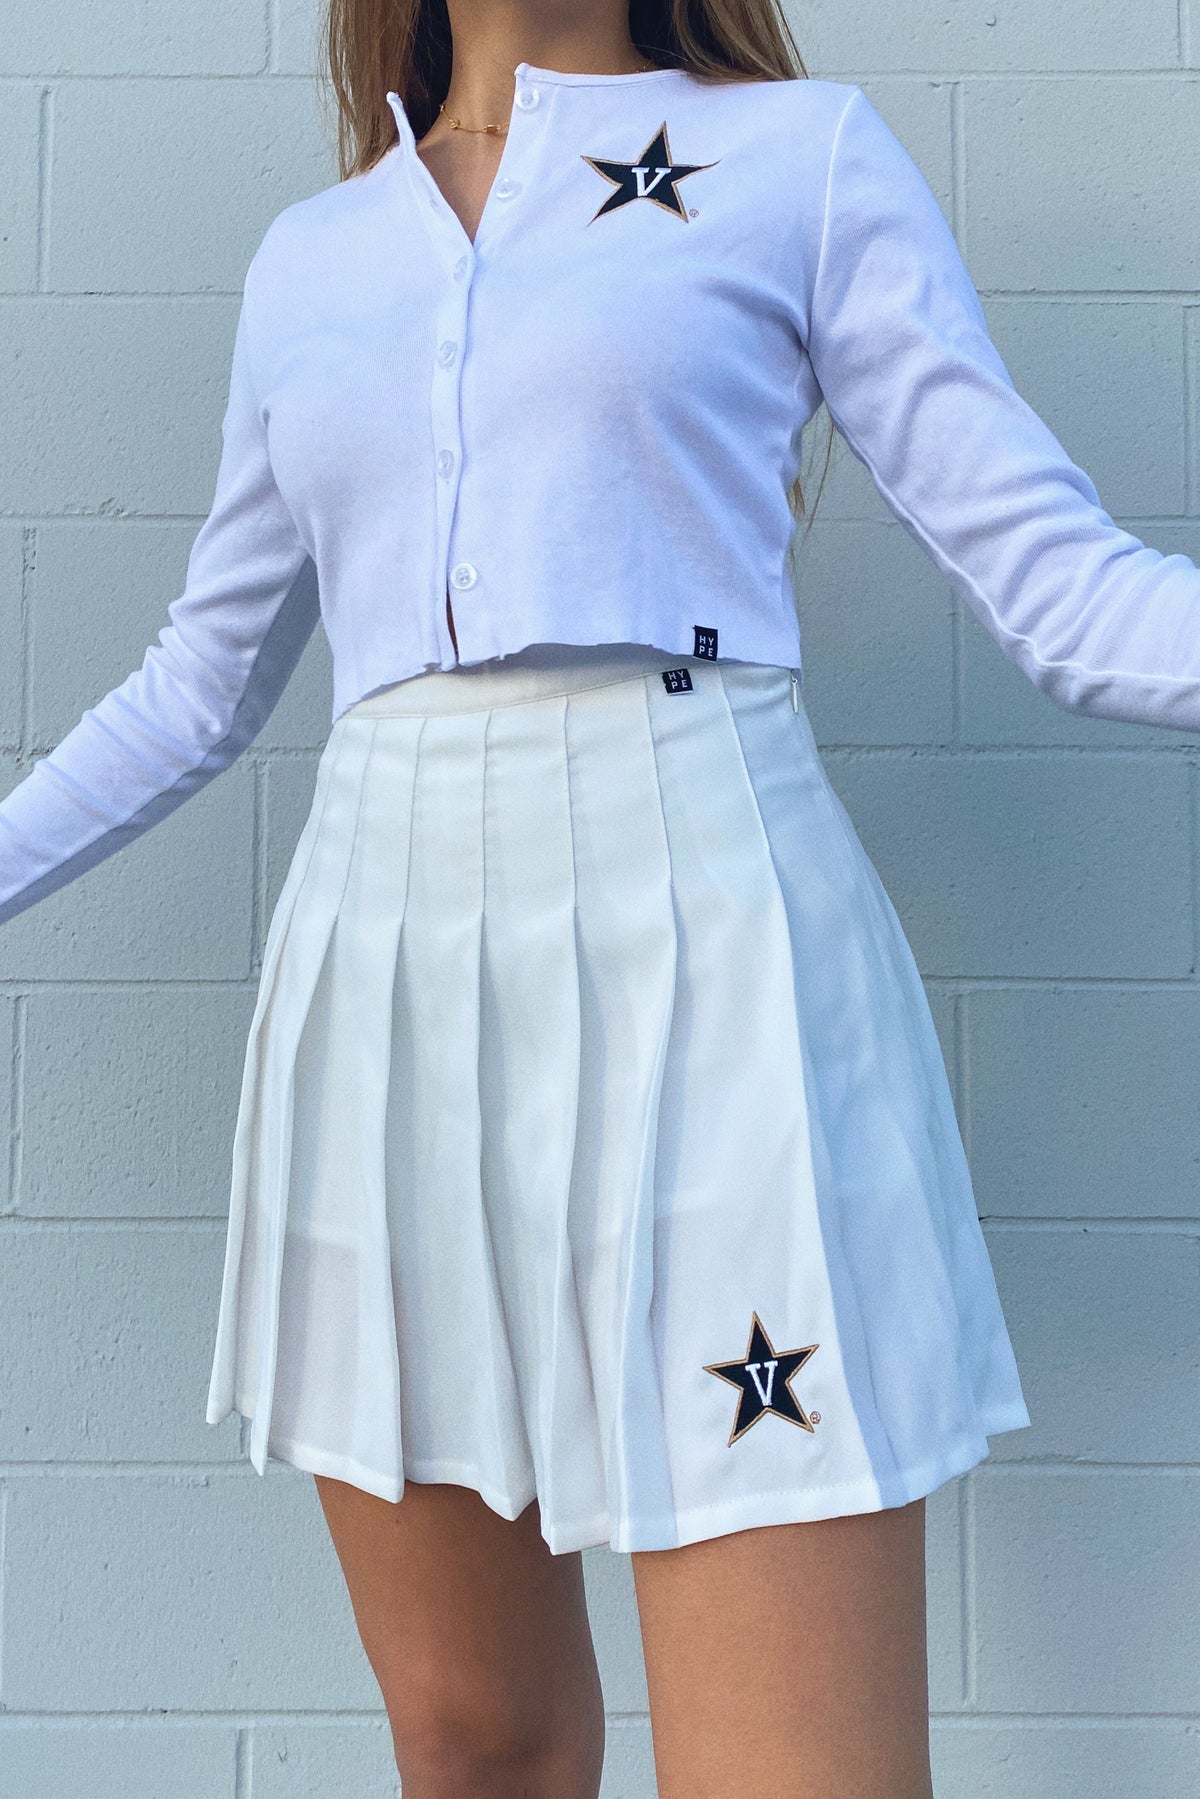 Vanderbilt Tennis Skirt